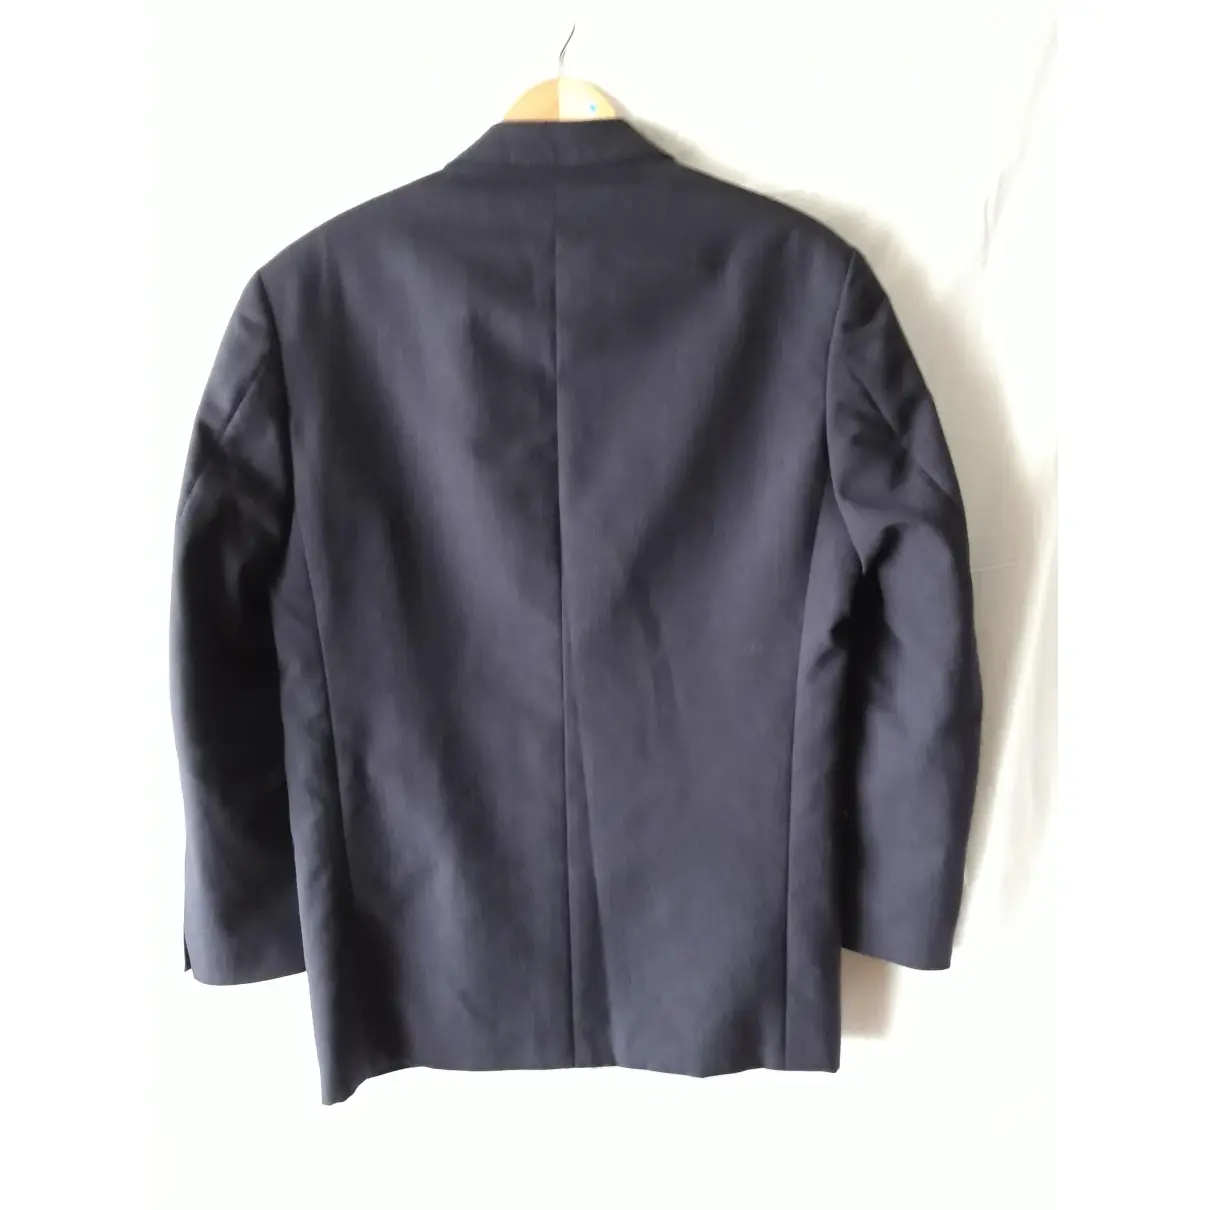 Kenzo Wool suit for sale - Vintage